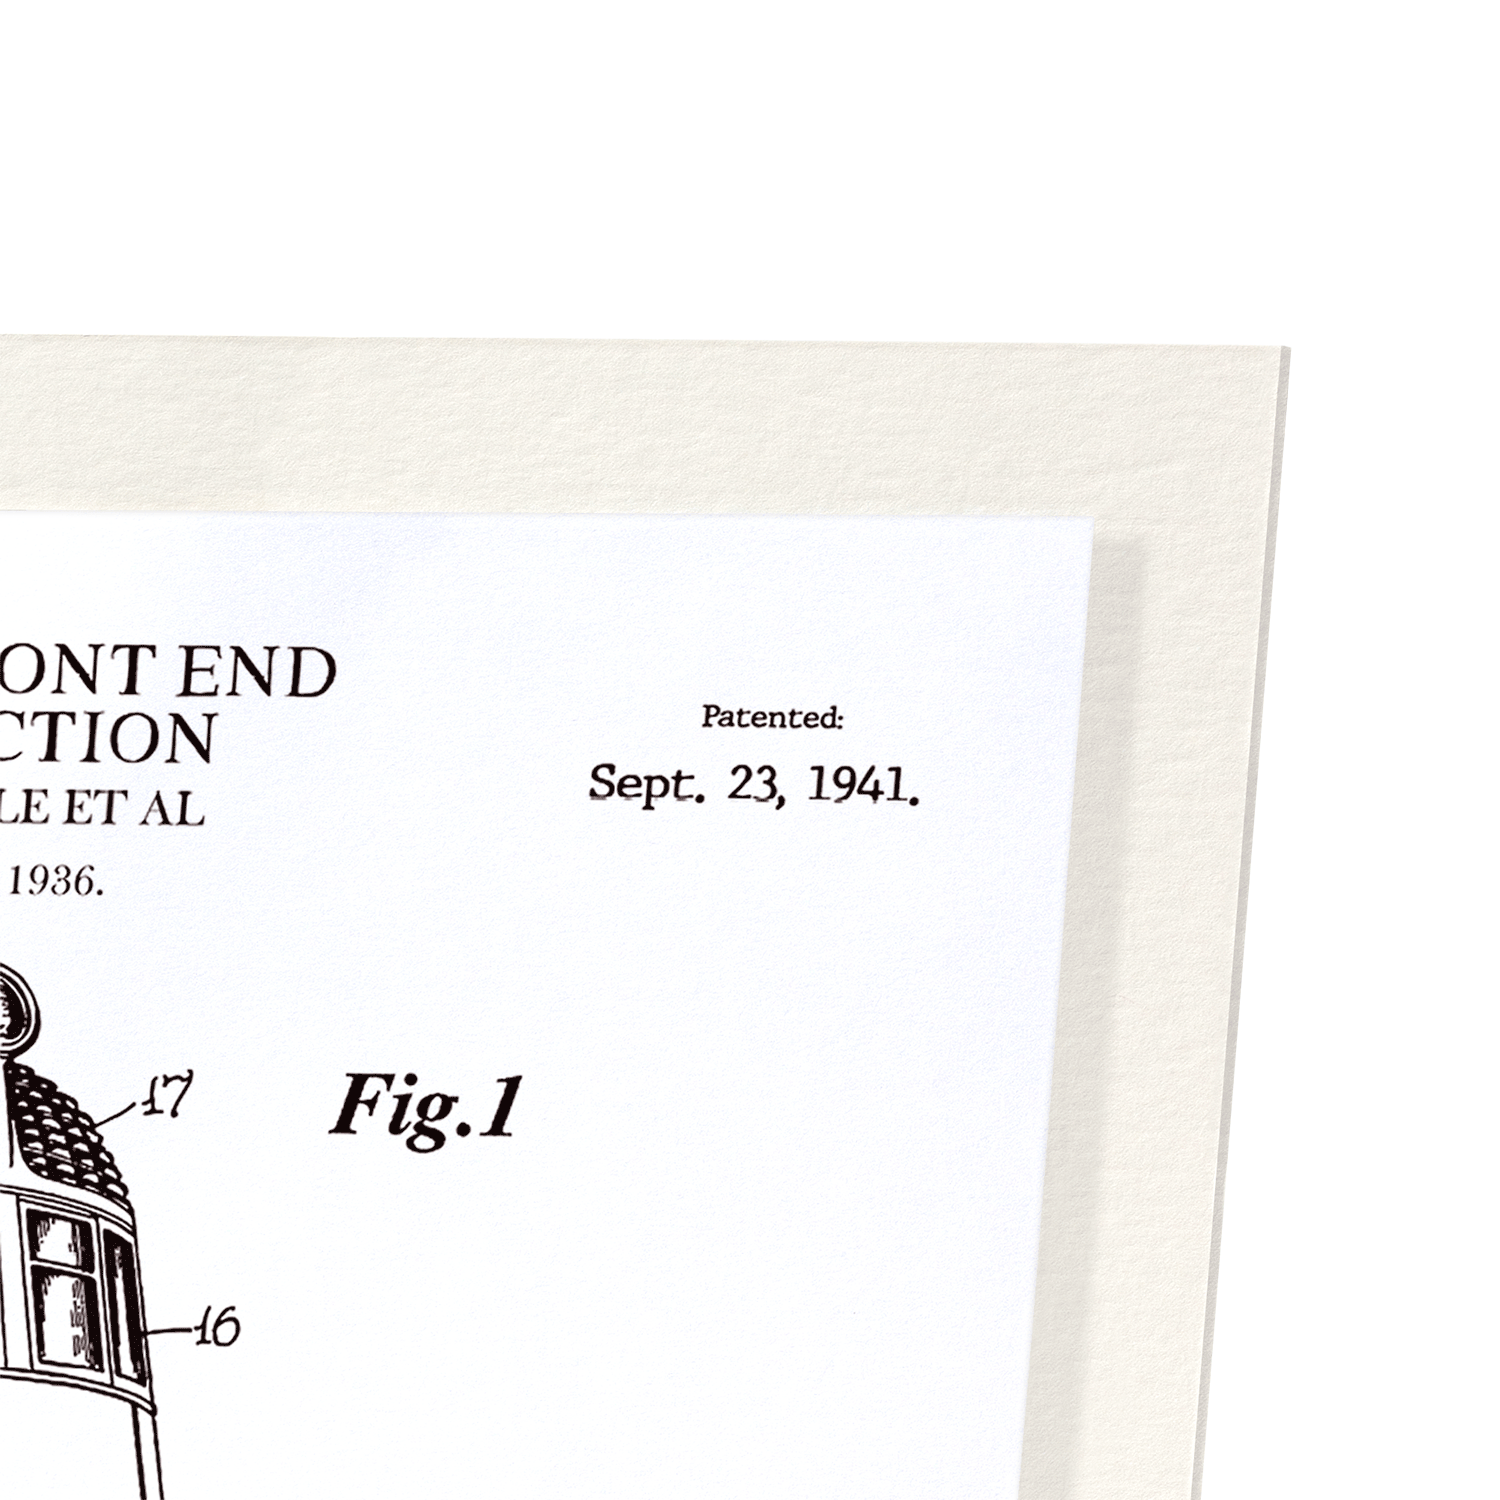 PATENT OF RAIL CAR FRONT END CONSTRUCTION (1941): Patent Art Print